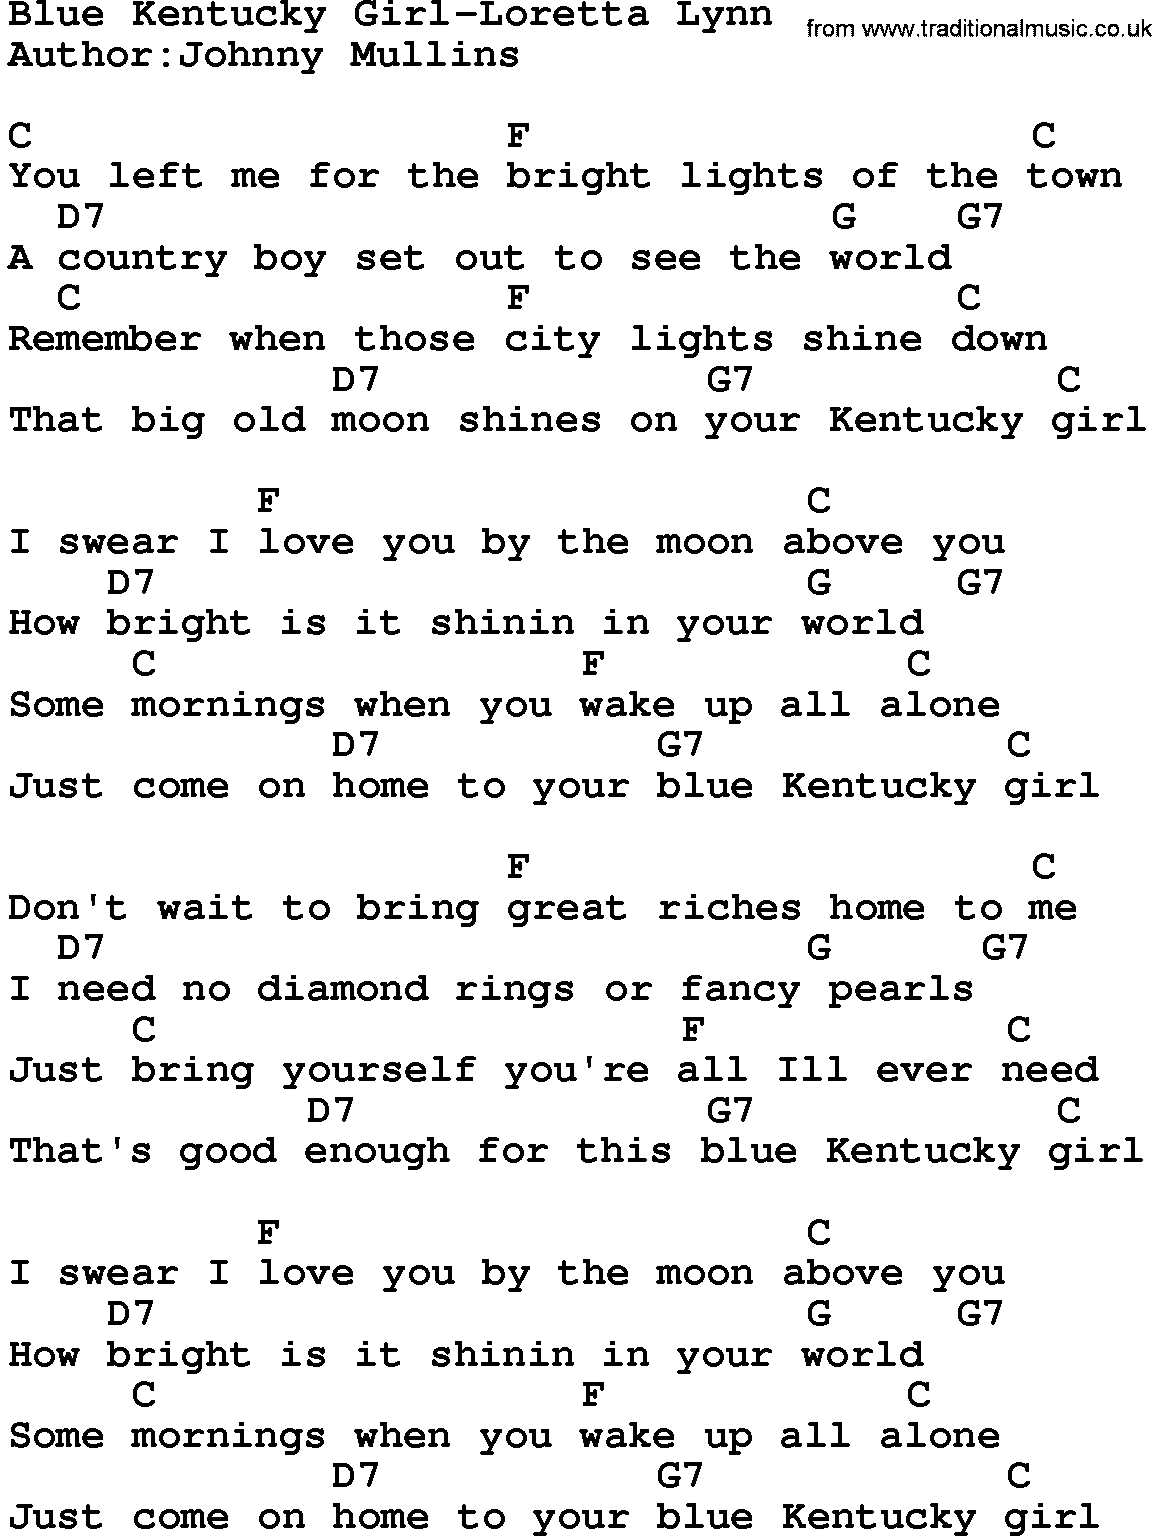 Country music song: Blue Kentucky Girl-Loretta Lynn lyrics and chords